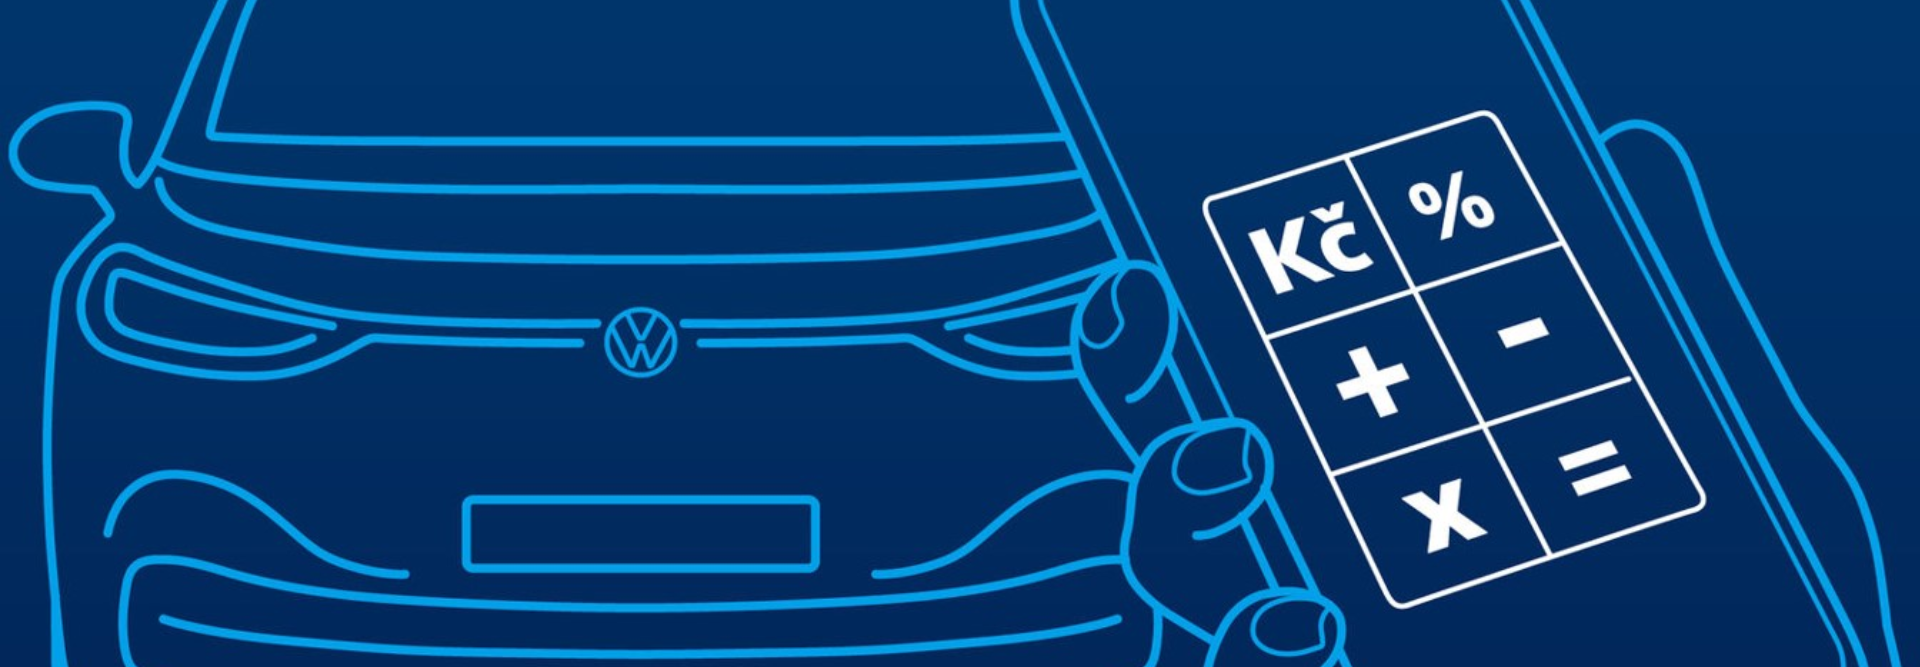 Volkswagen Limited Edition